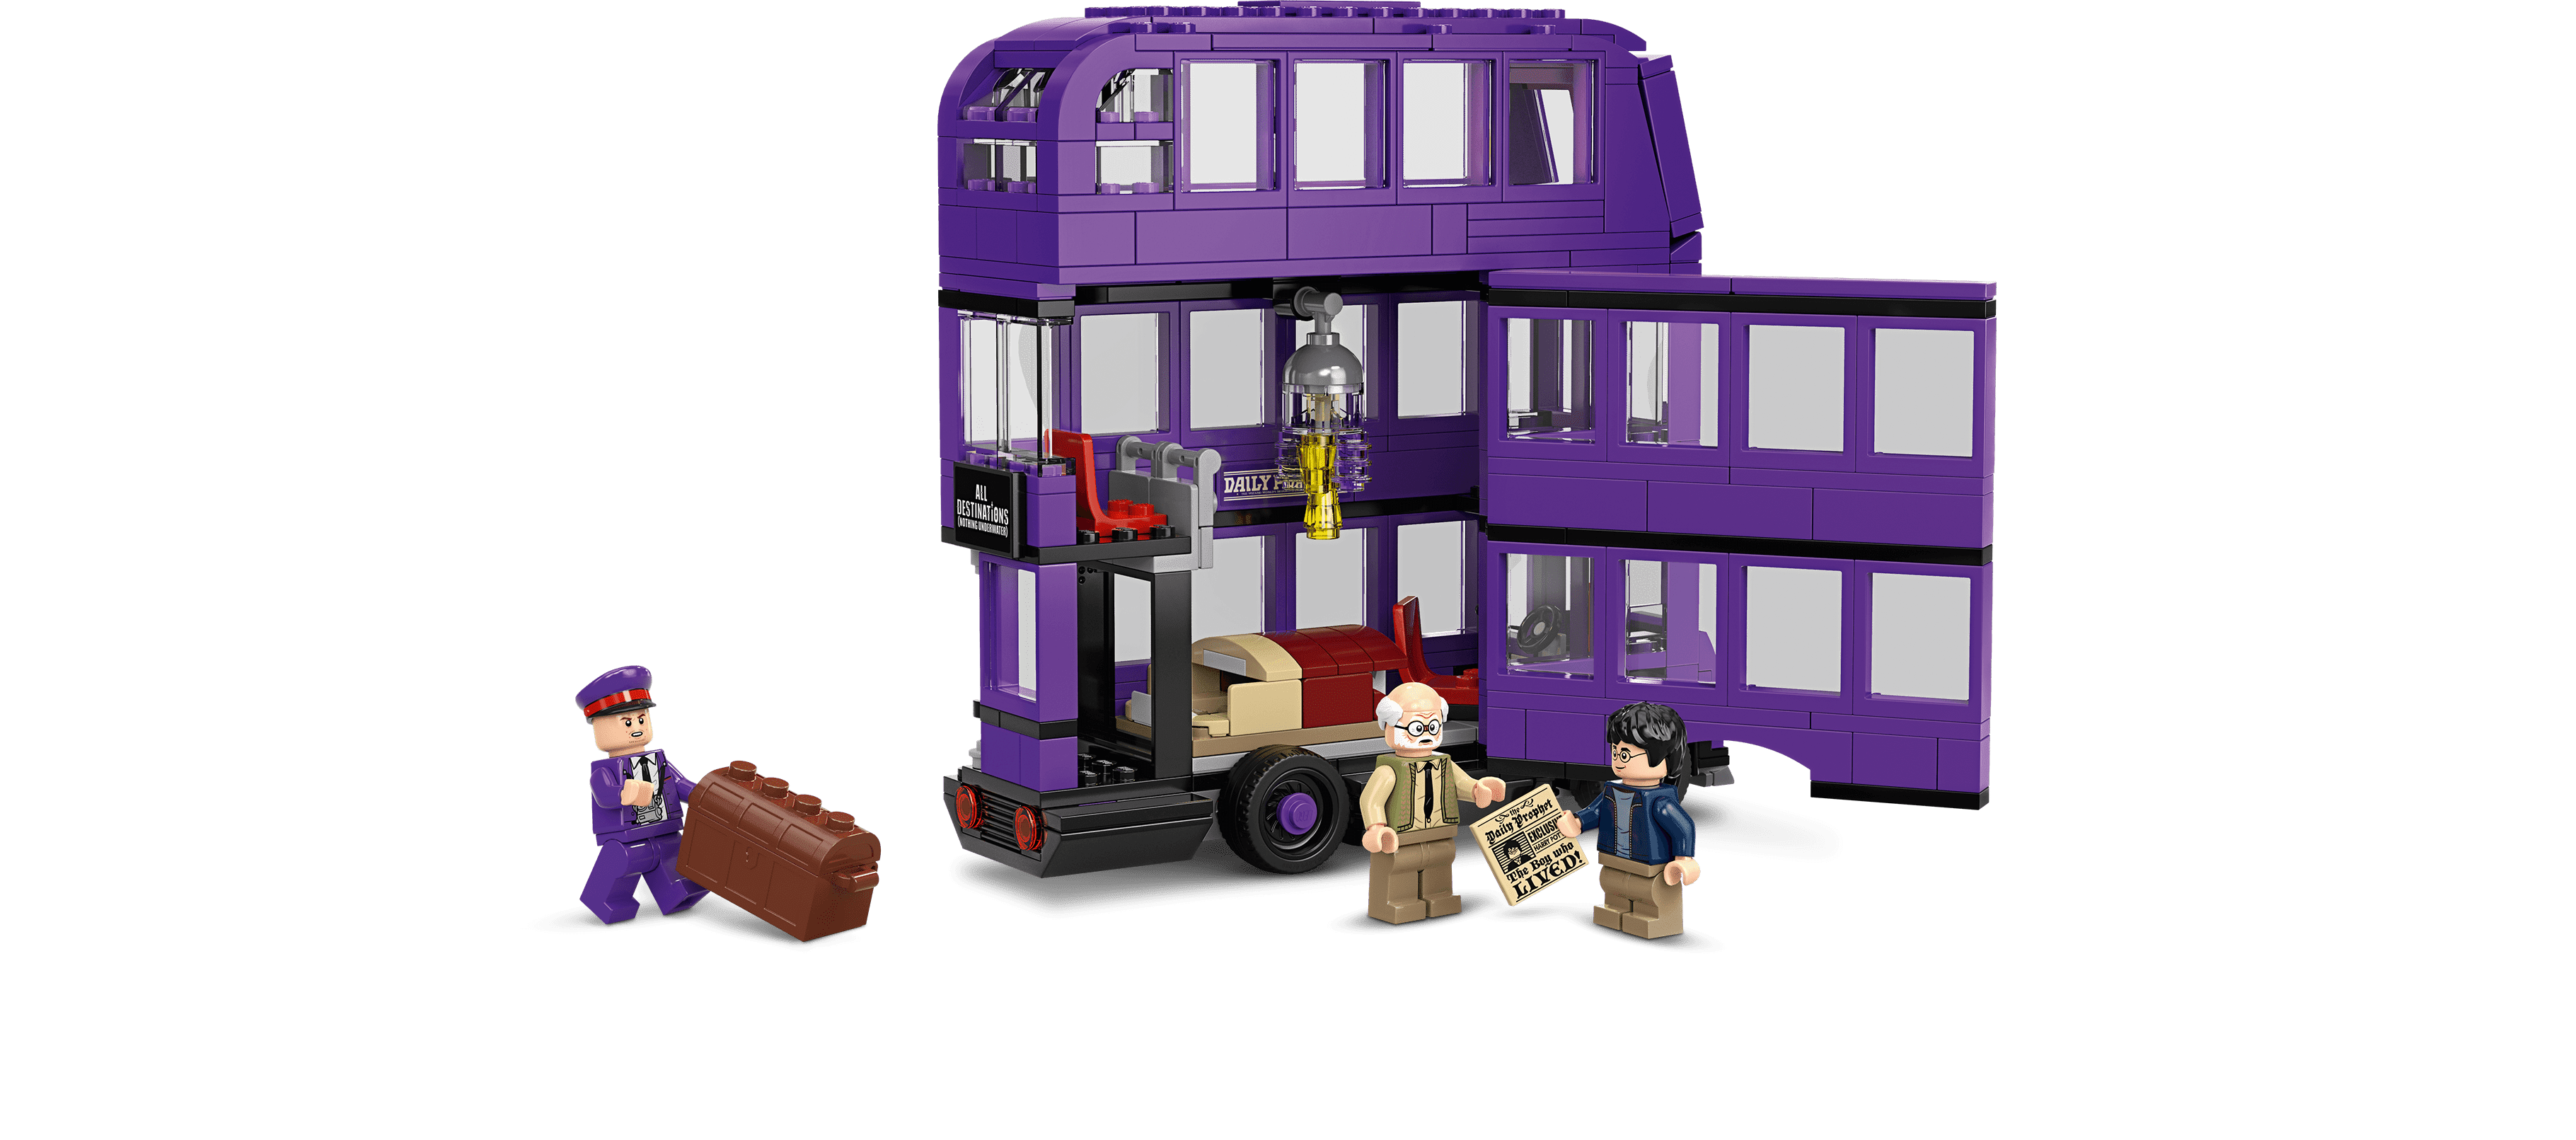 bjerg pessimistisk pilot LEGO The Knight Bus 75957 Building Set (403 Pieces) - Walmart.com